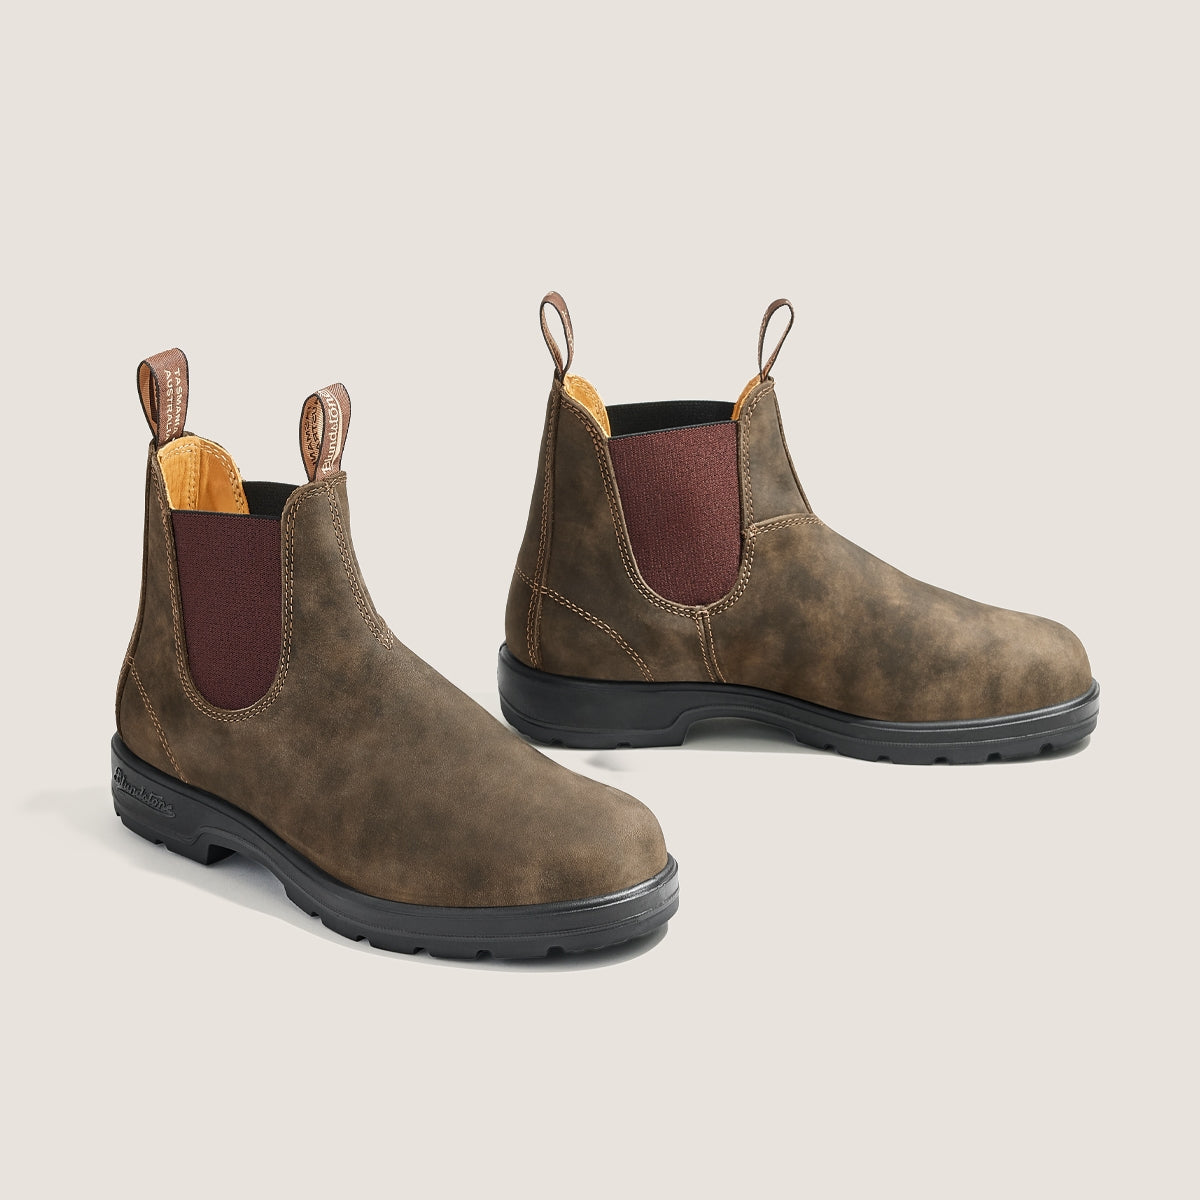 Blundstone Unisex Chelsea Boots - Rustic Brown